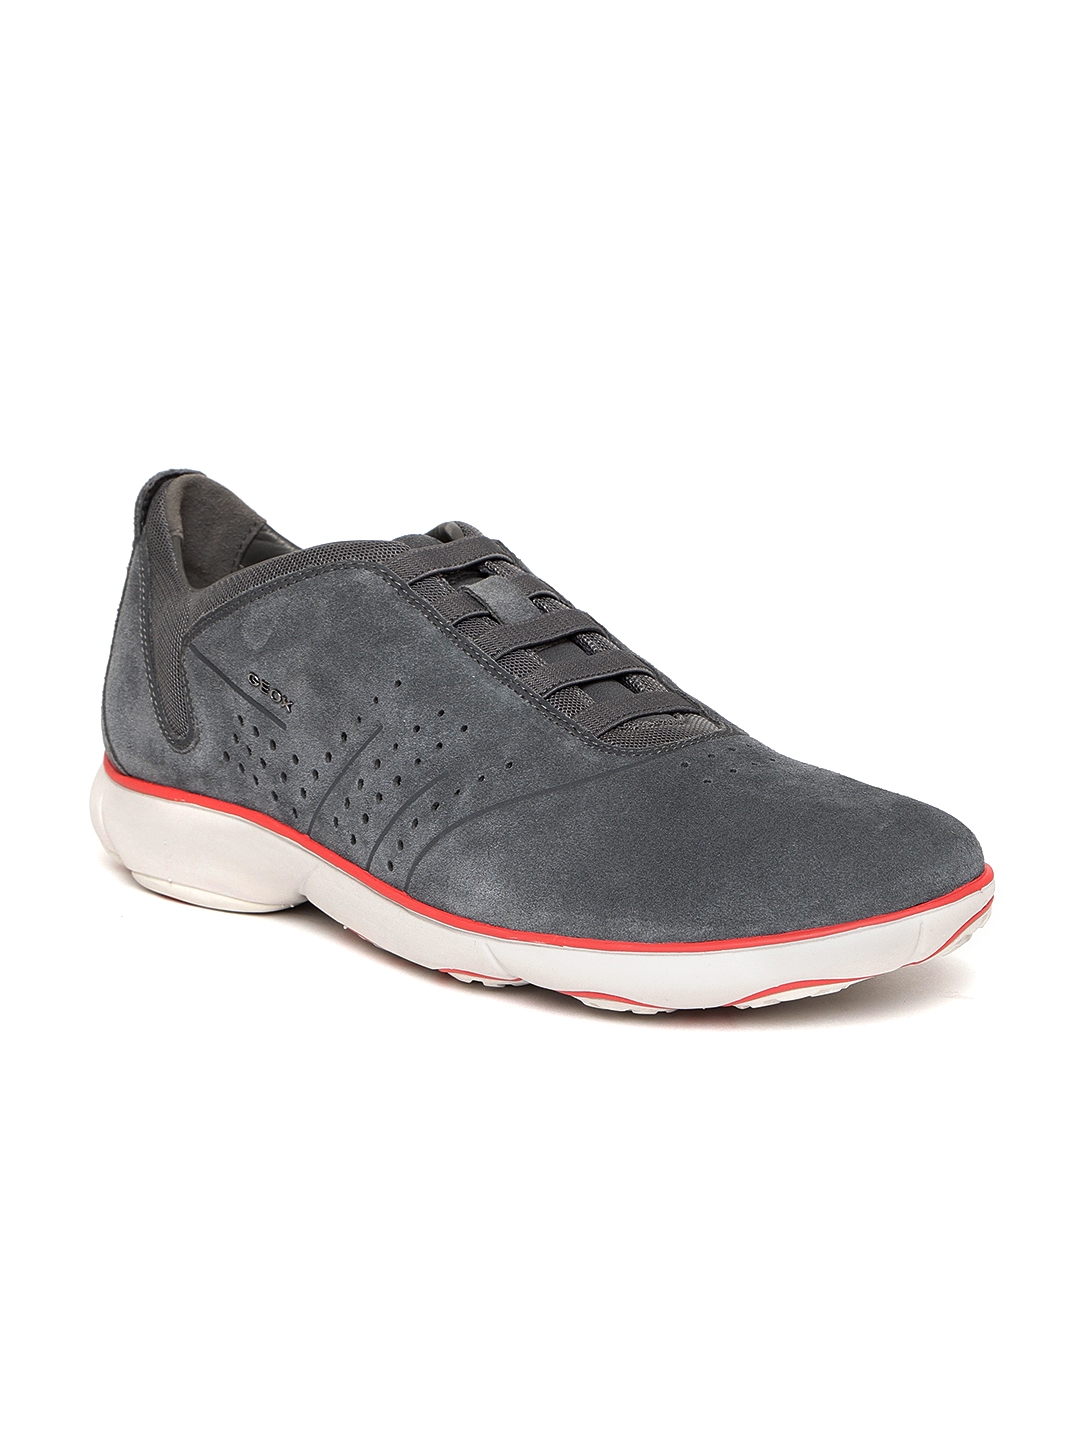 Buy Geox Men Grey Suede Slip On Sneakers - Casual Shoes for Men 7520748 ...